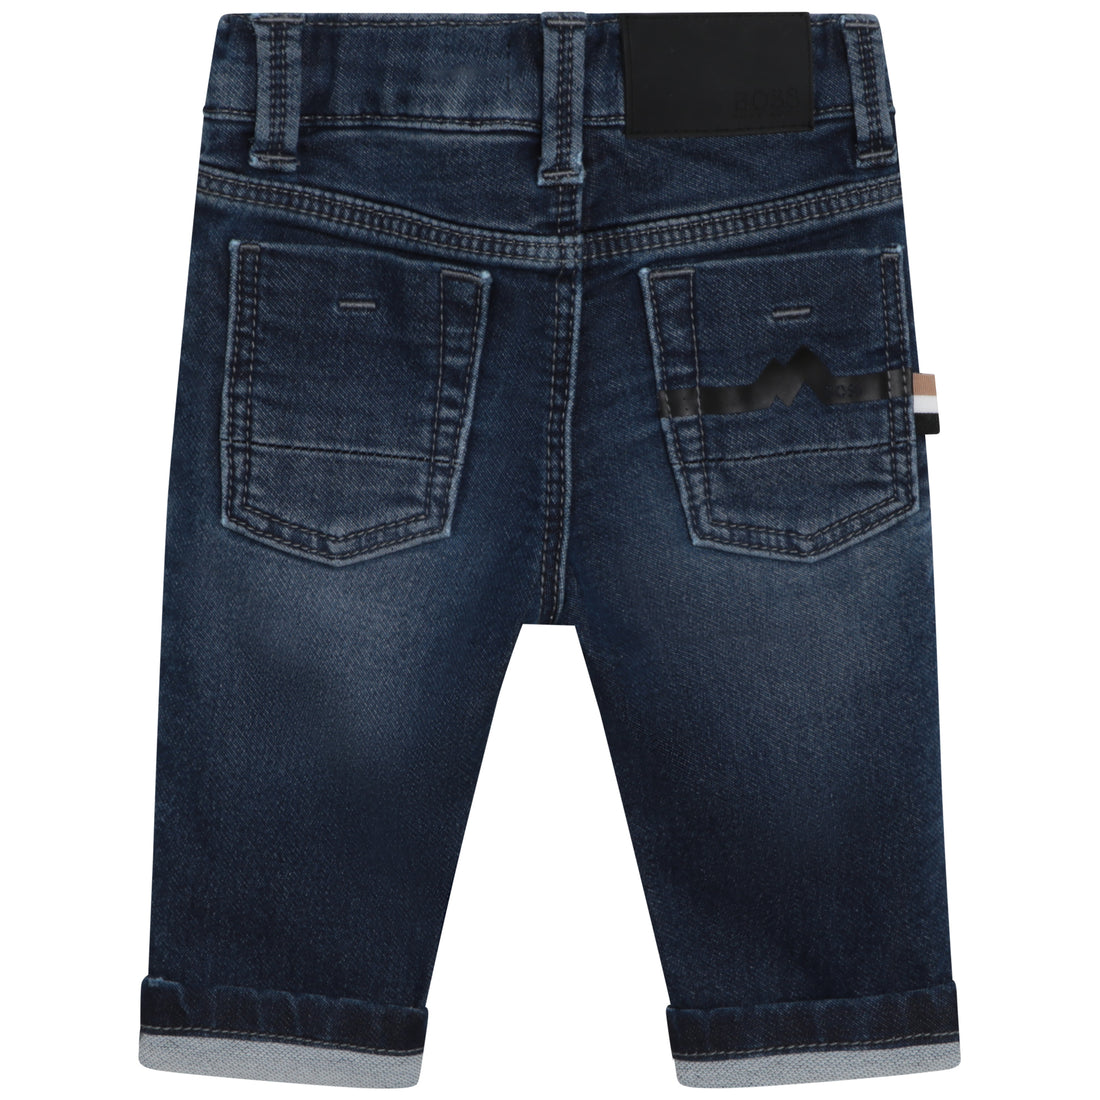 Boss Denim Trousers Style: J04451